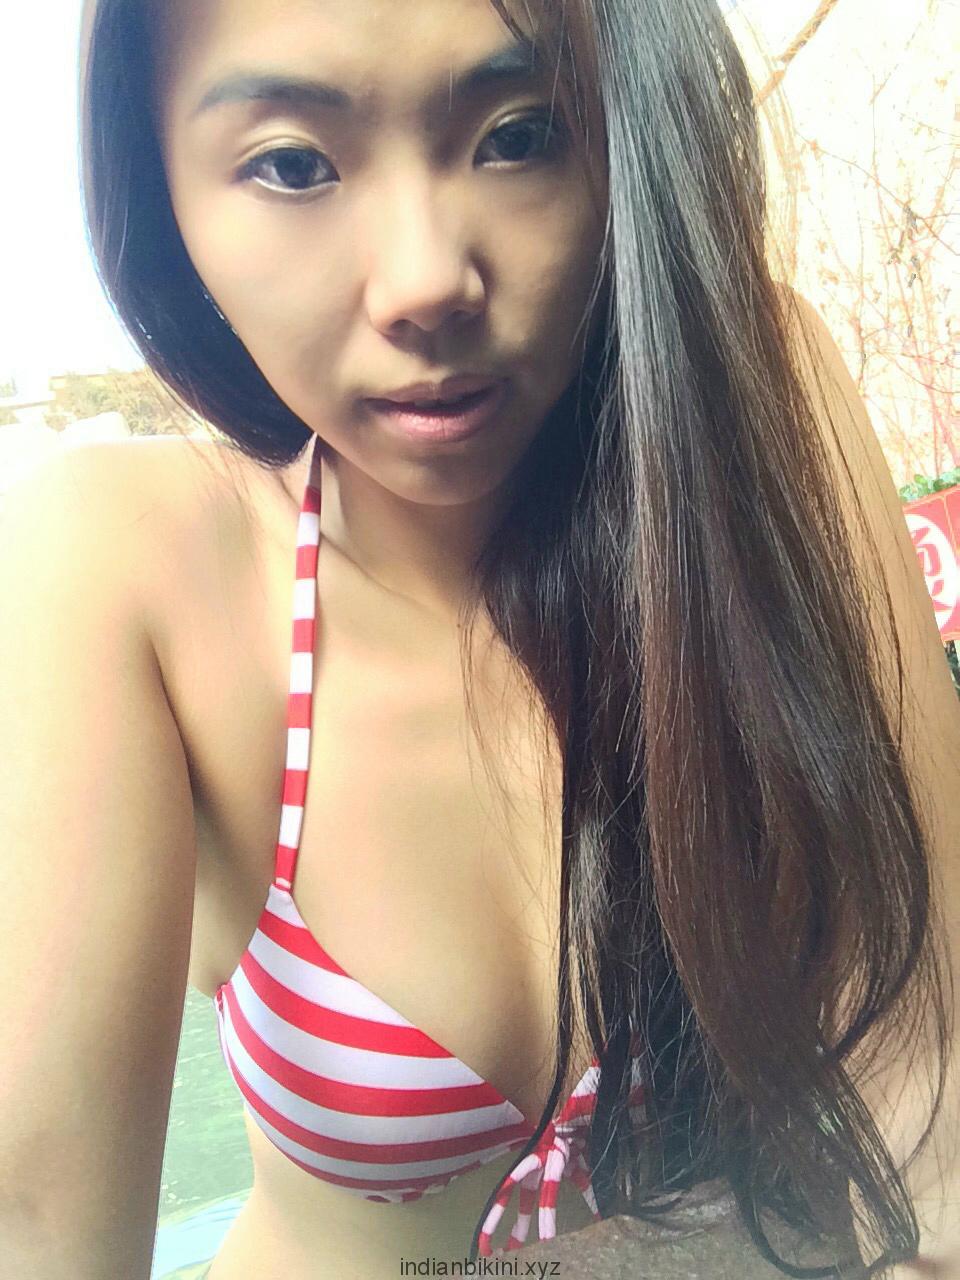 berke can recommends teen bikini selfie tumblr pic